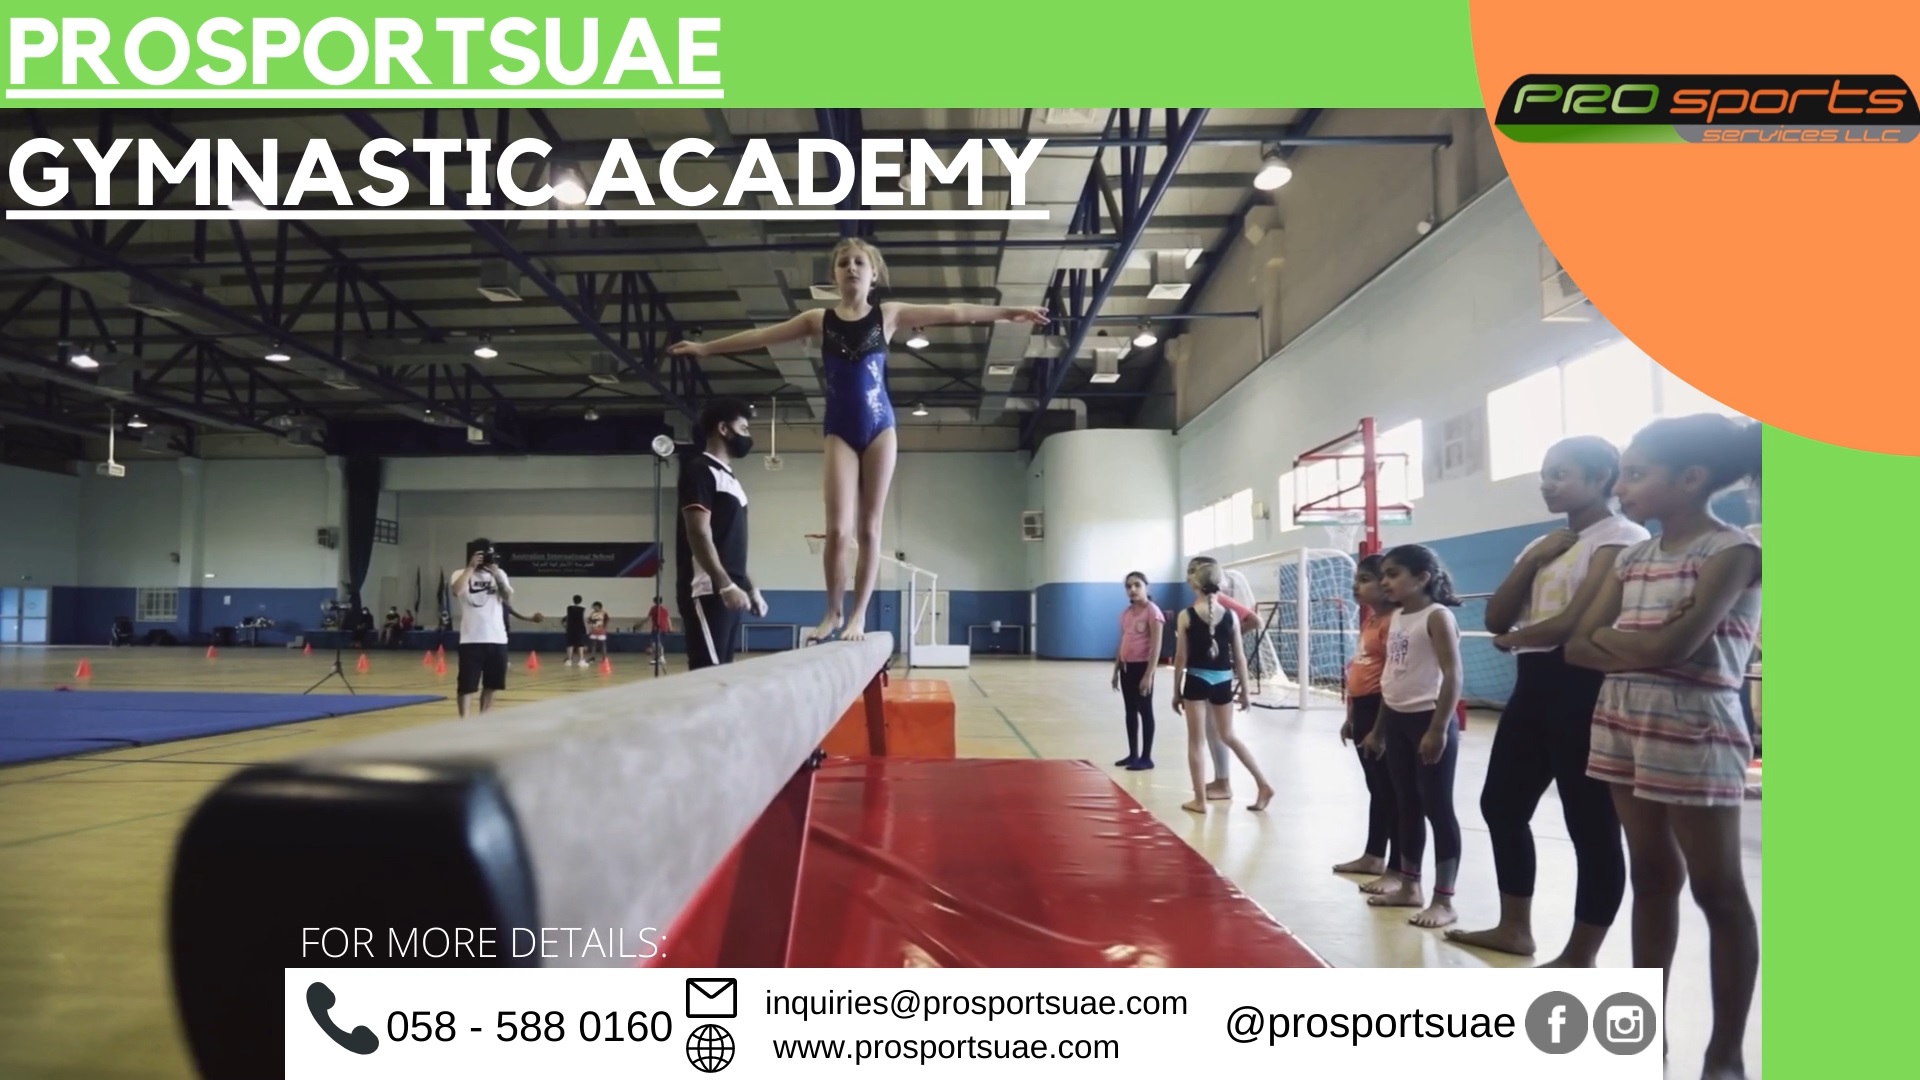 Gymnastics Classes by Prosportsuae